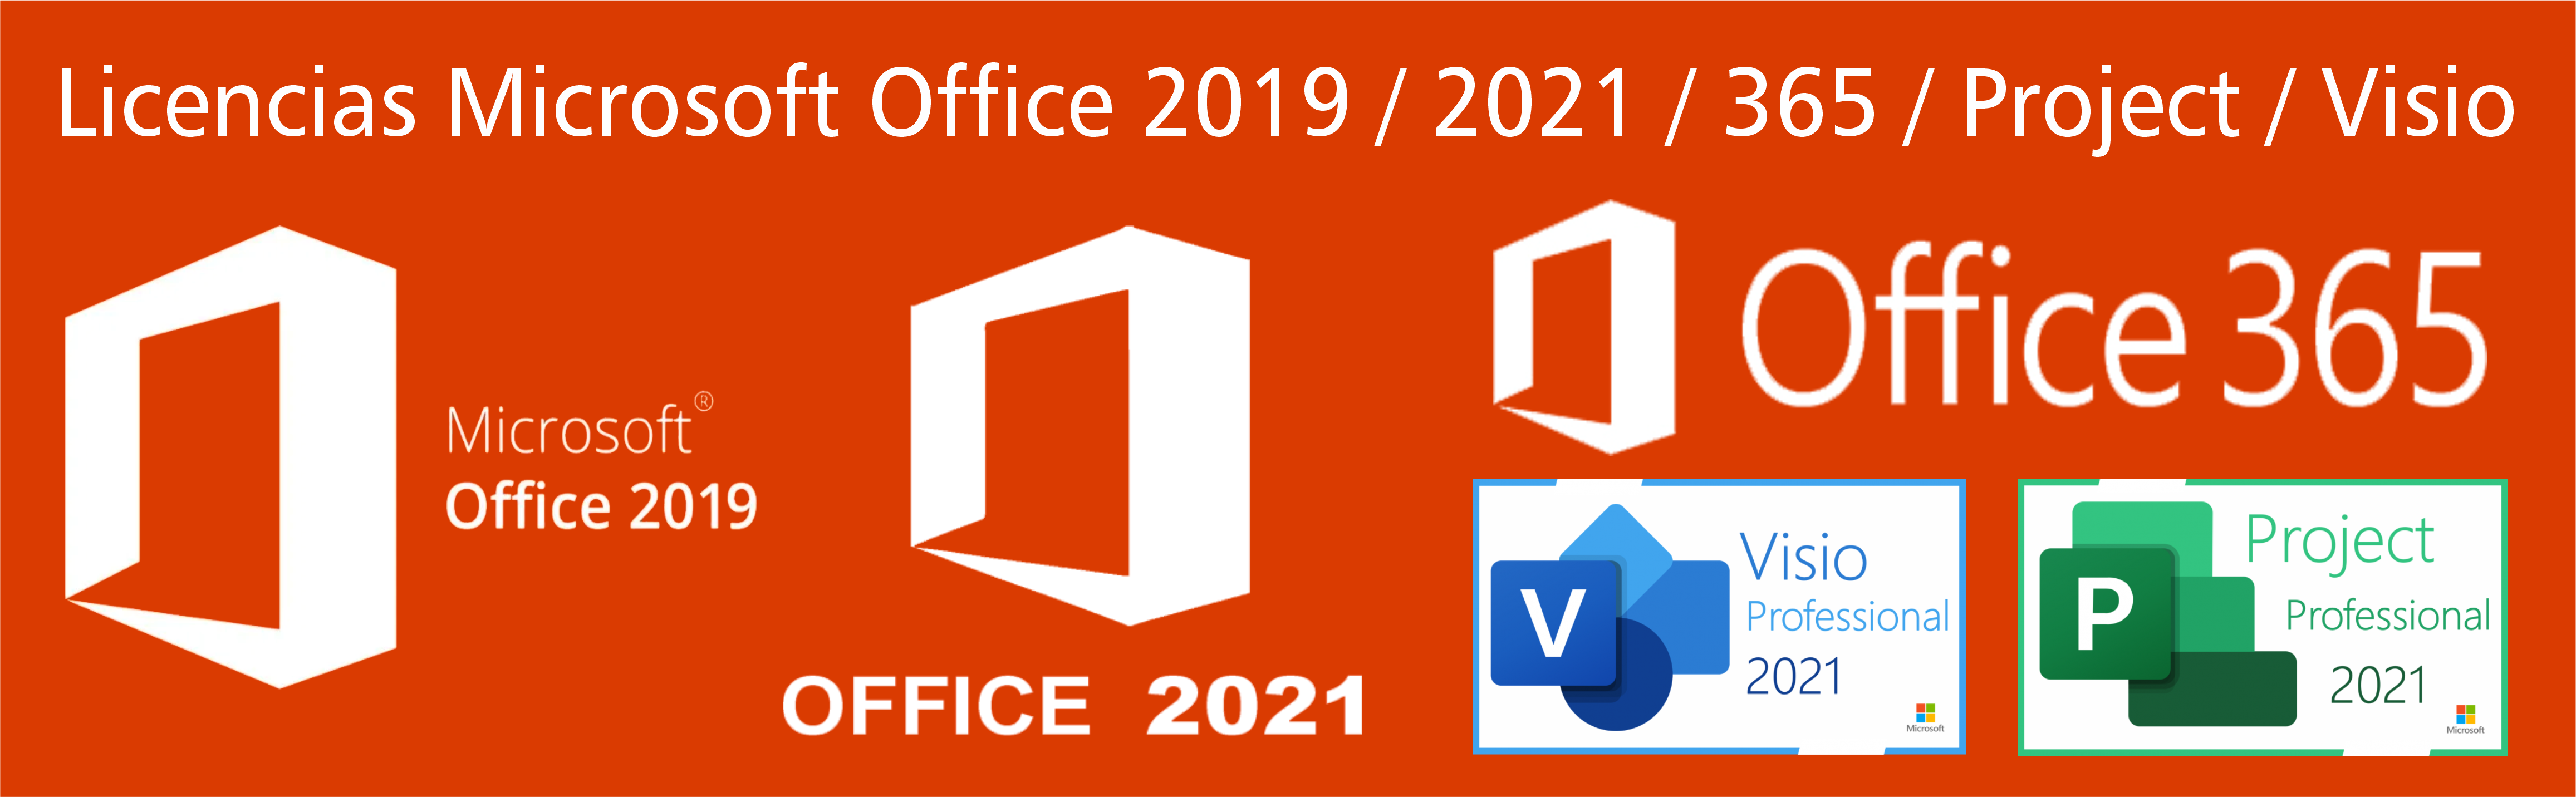 Licencias Microsoft Office